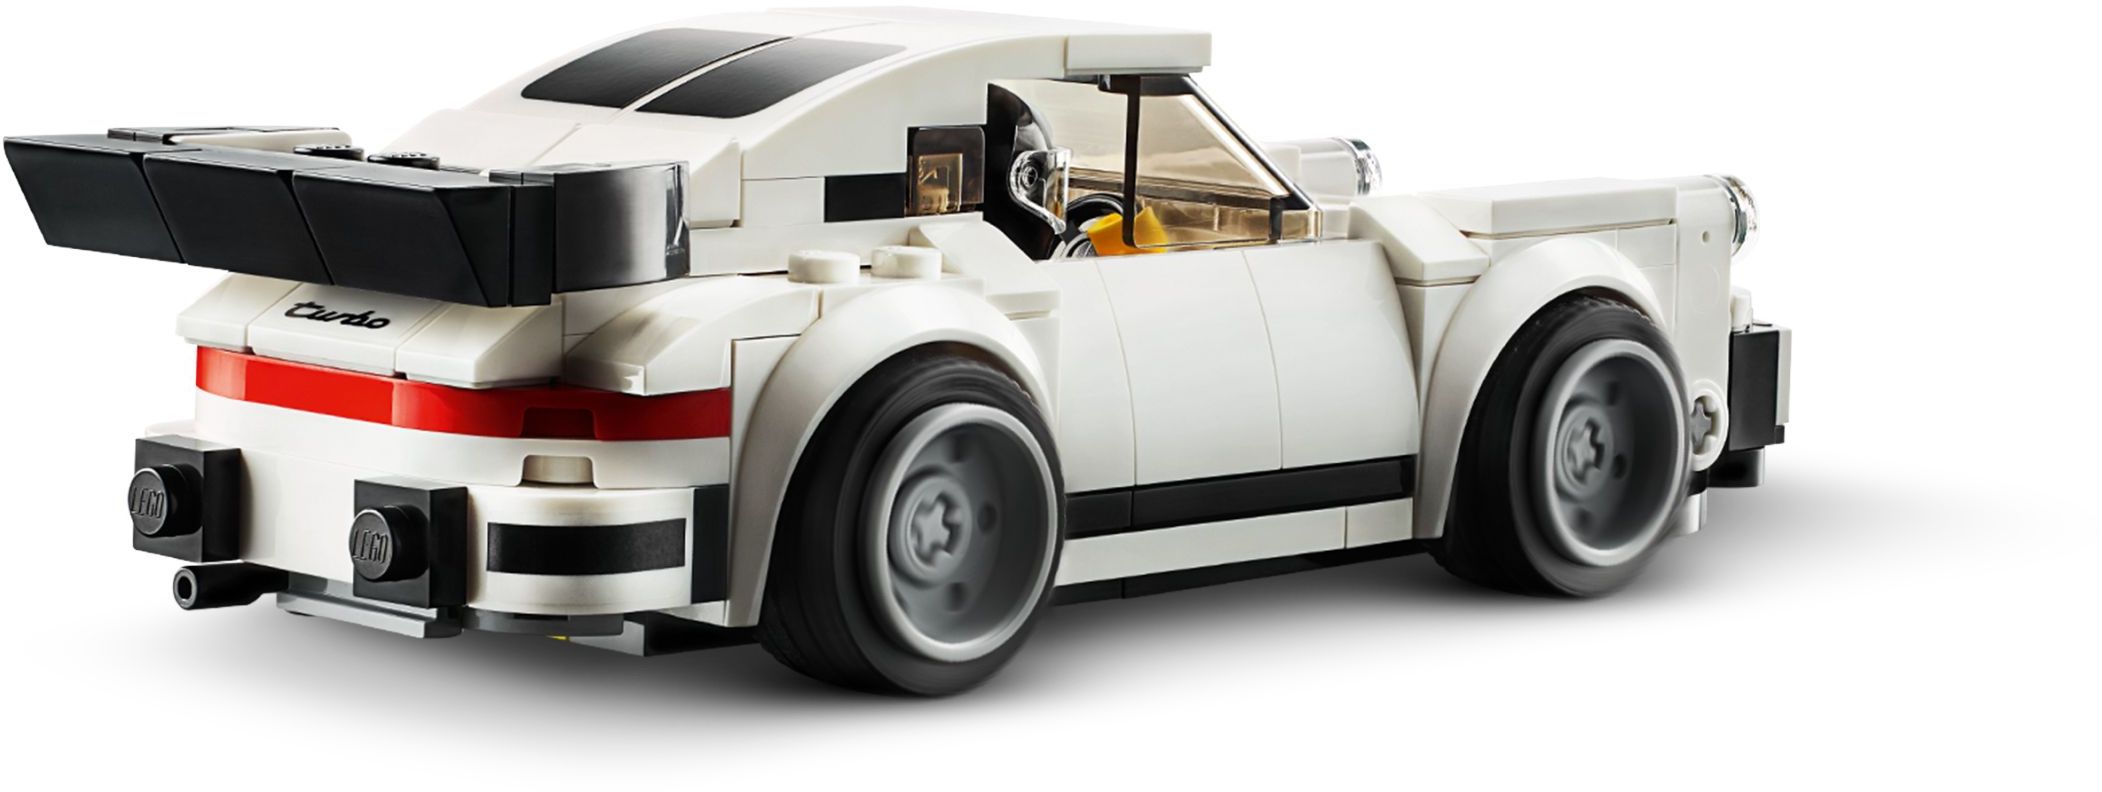 lego-75895-1974-porsche-911-turbo-3-0-lego-speed-champions-set-for